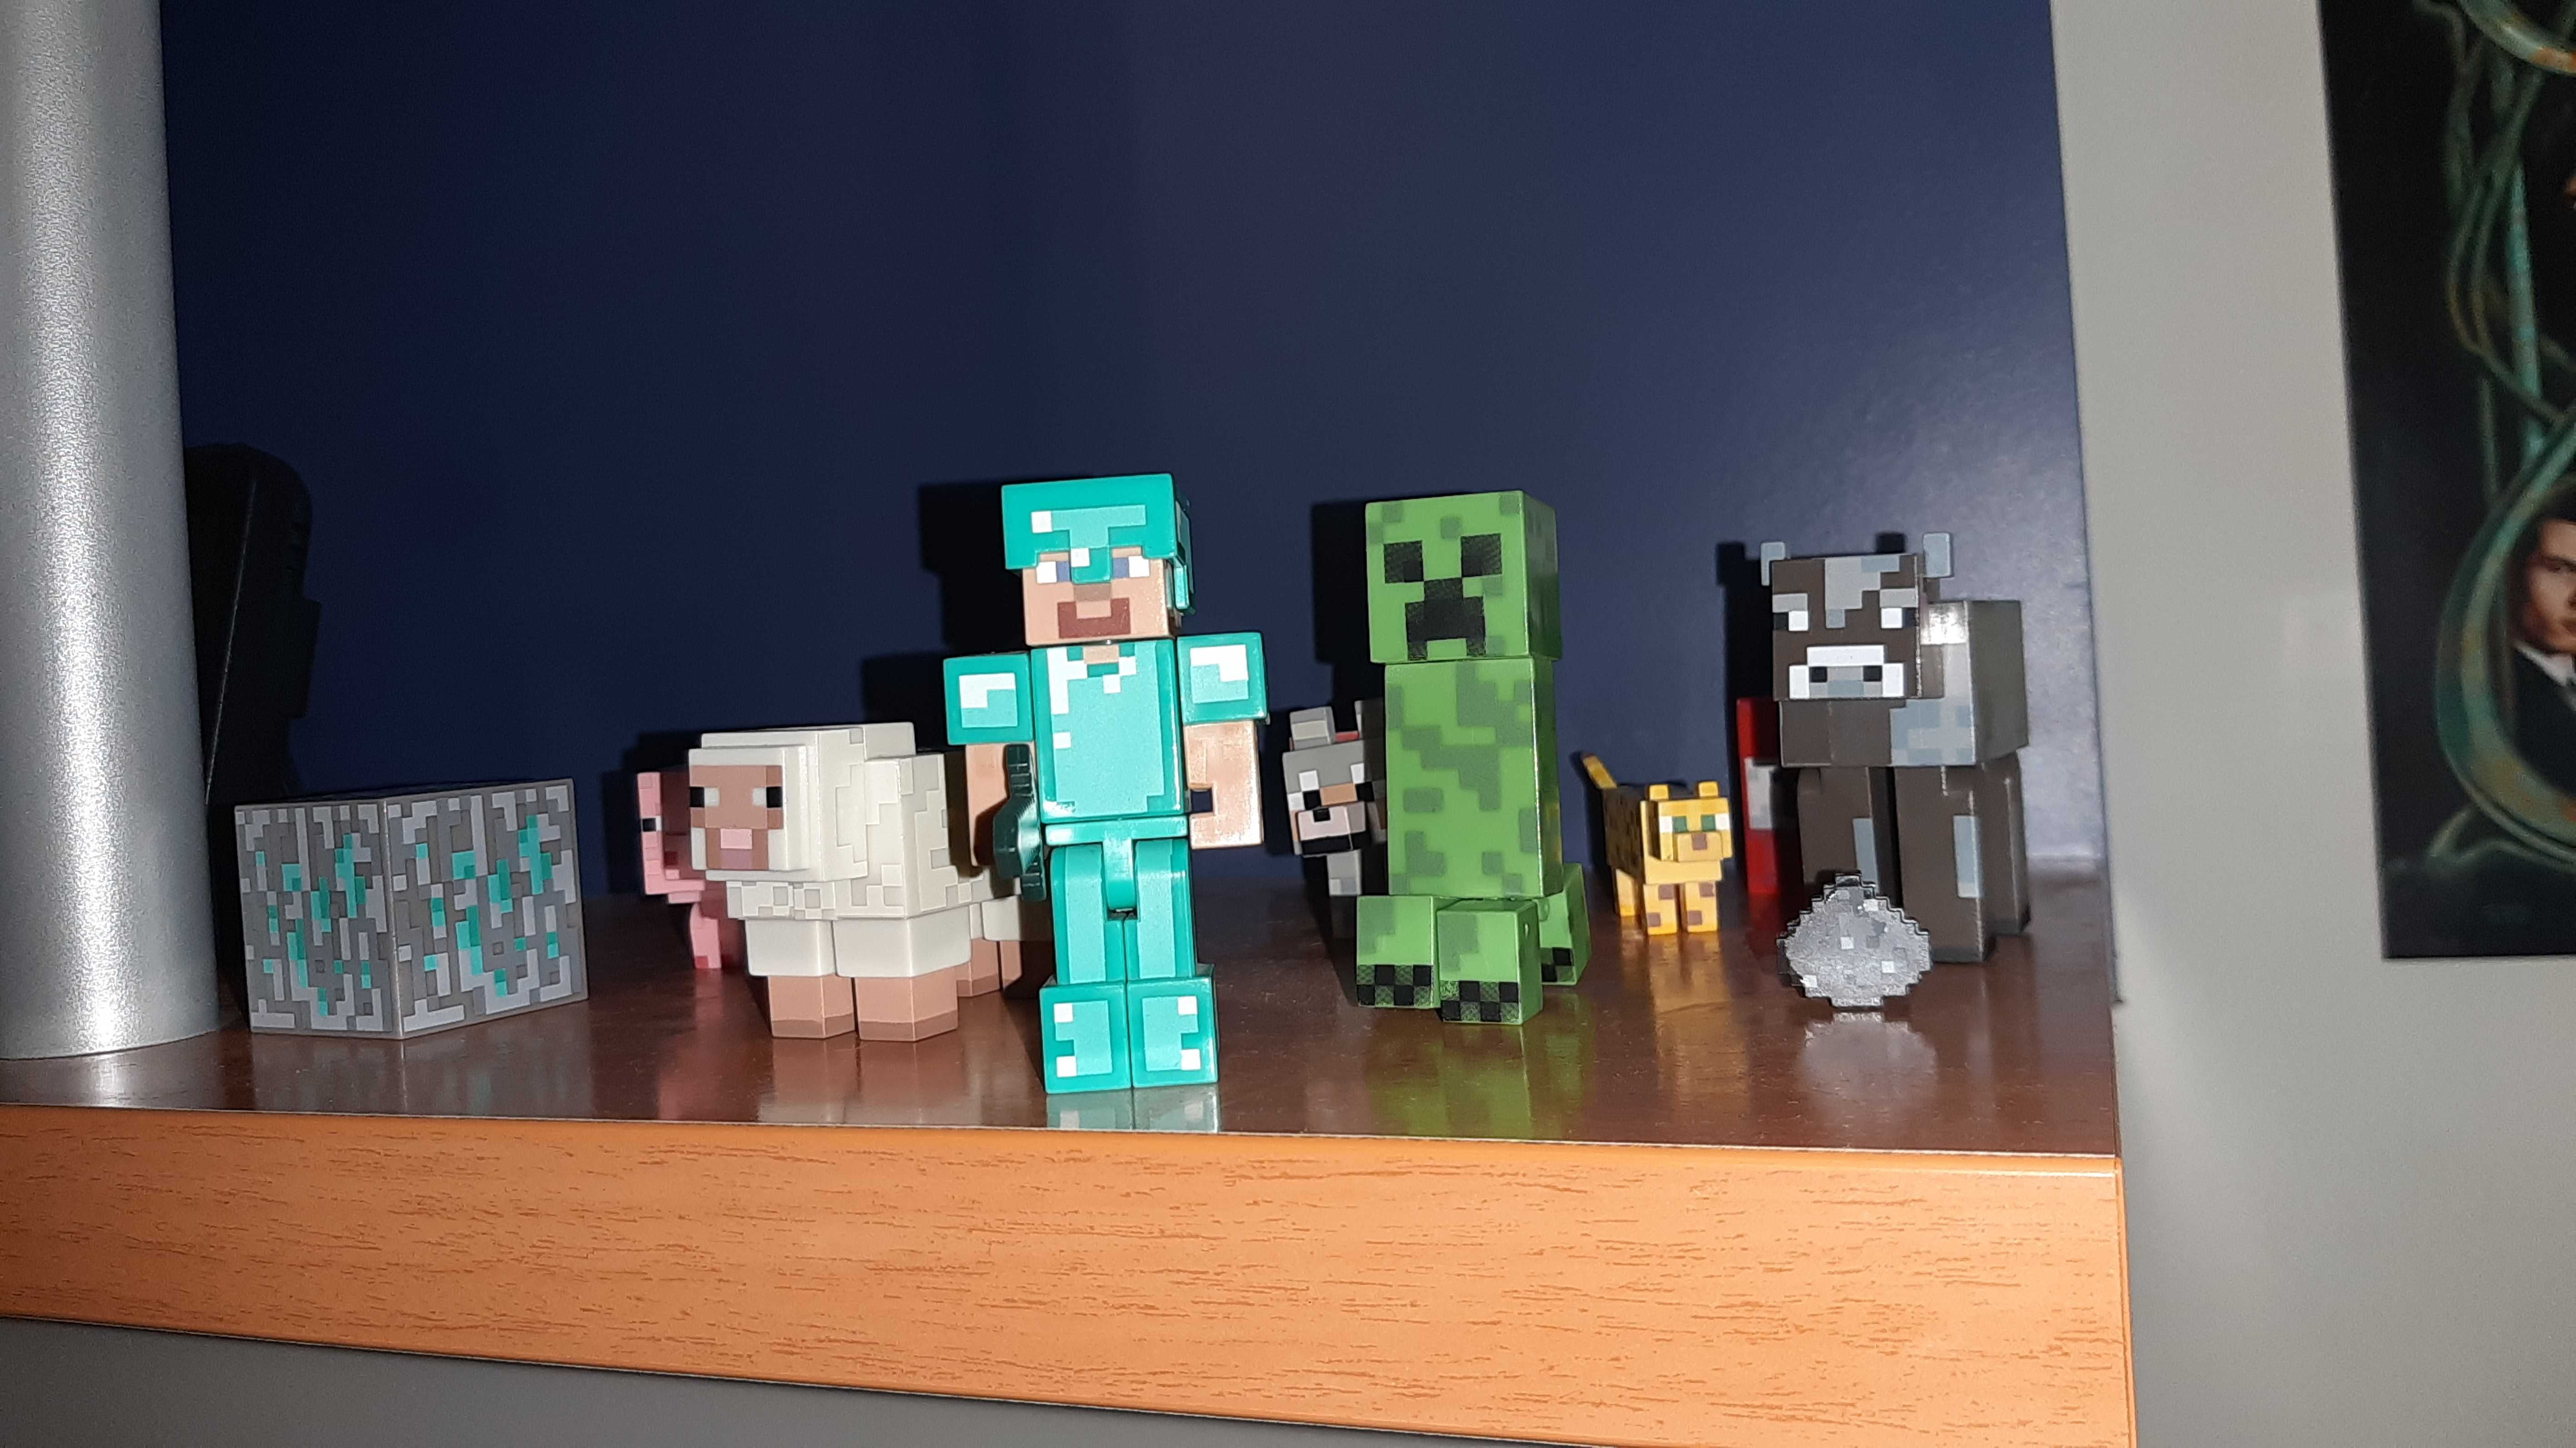 Minecraft® - Figuras (Merchandising) + Porta-Chaves